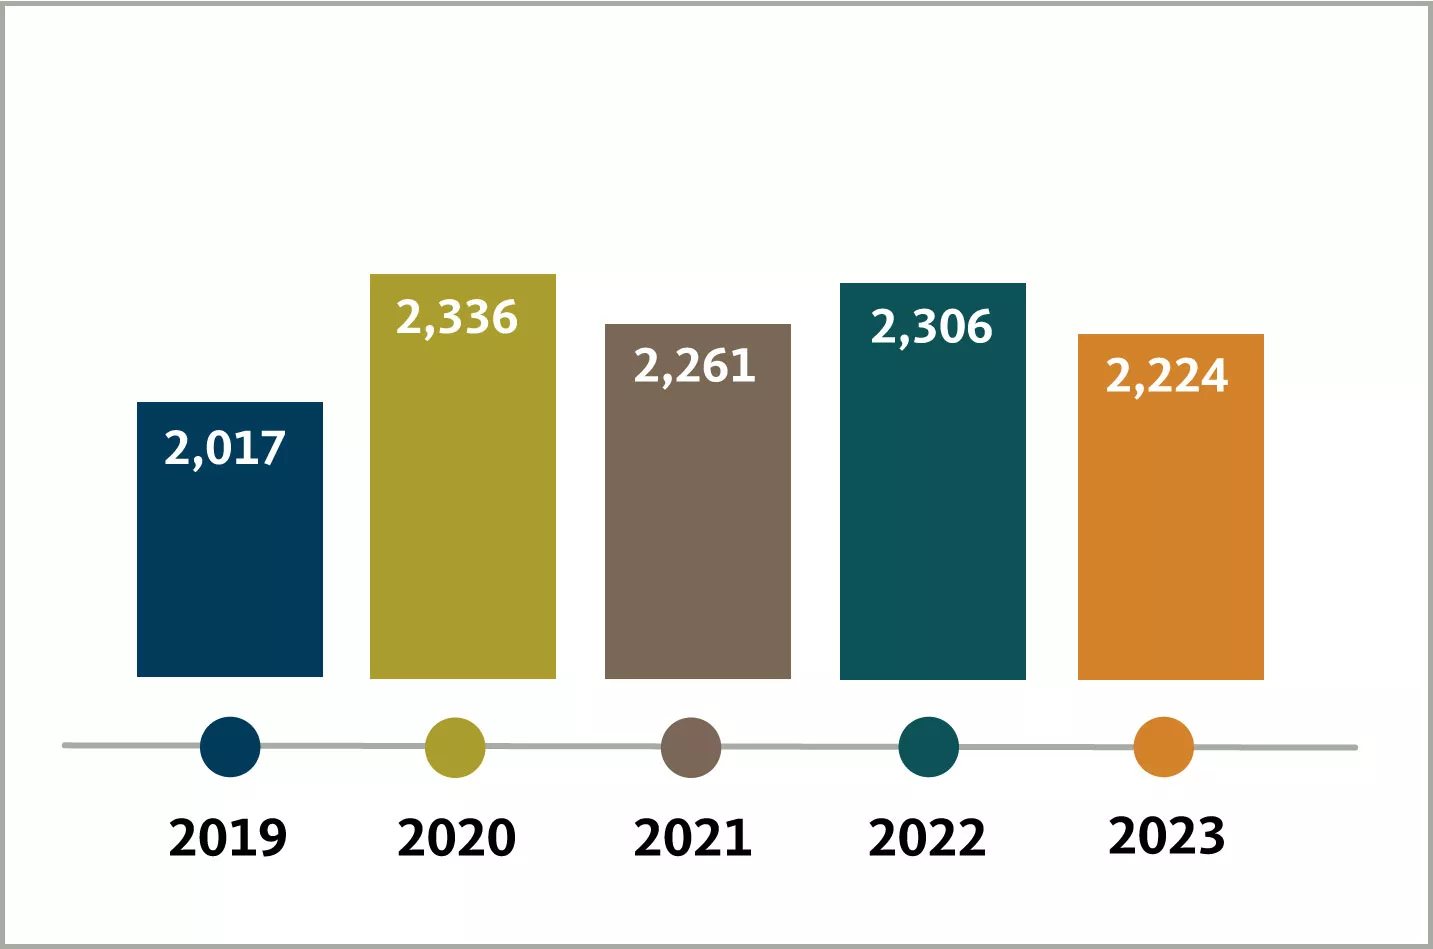 Transfer enrollment trends last 5 years (2019-2023): 2017, 2336, 2261, 2306, 2224